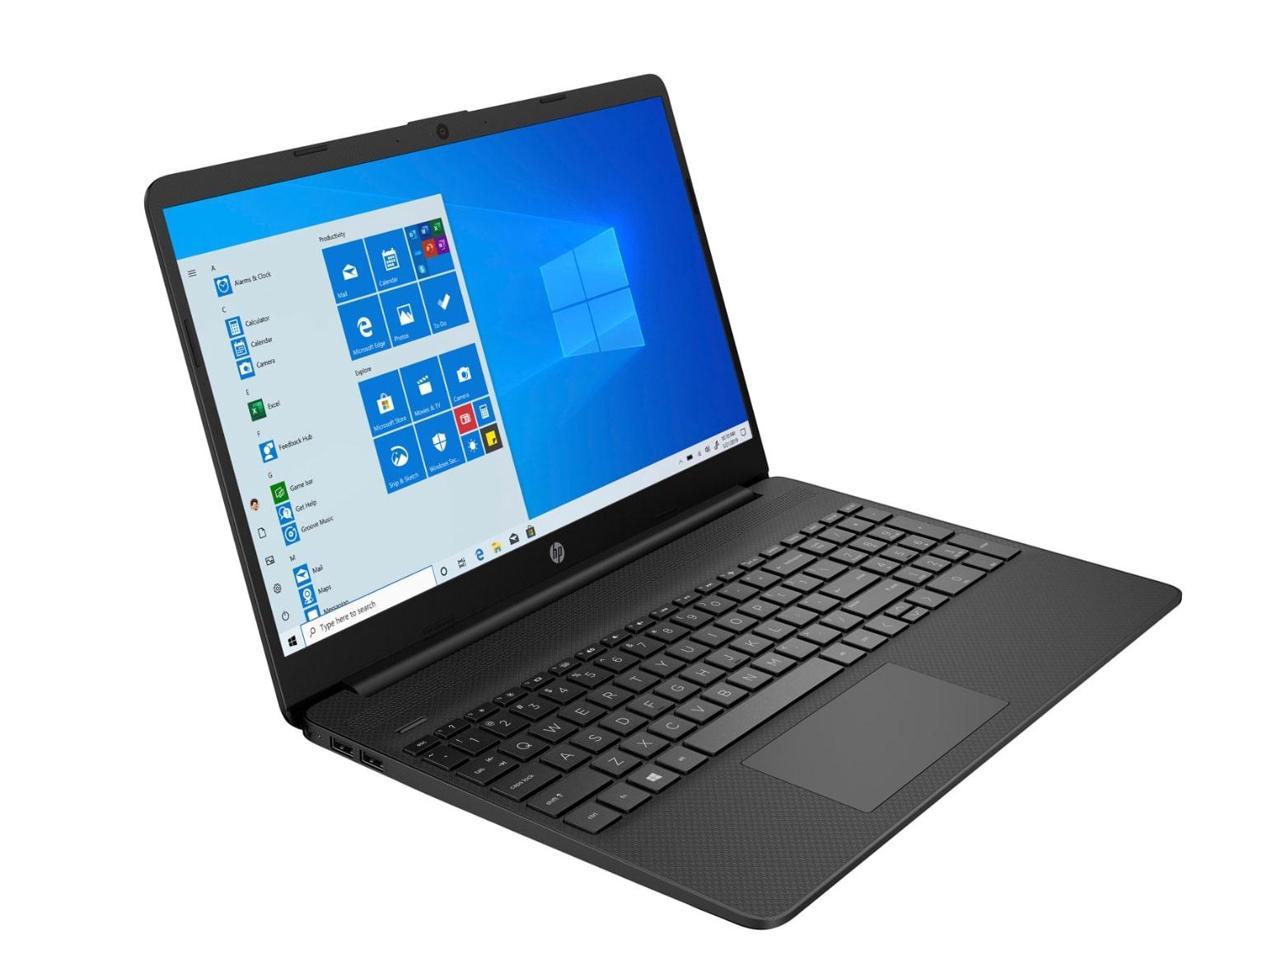 HP 15.6” HD Intel laptop with 8GB RAM/256GB SSD